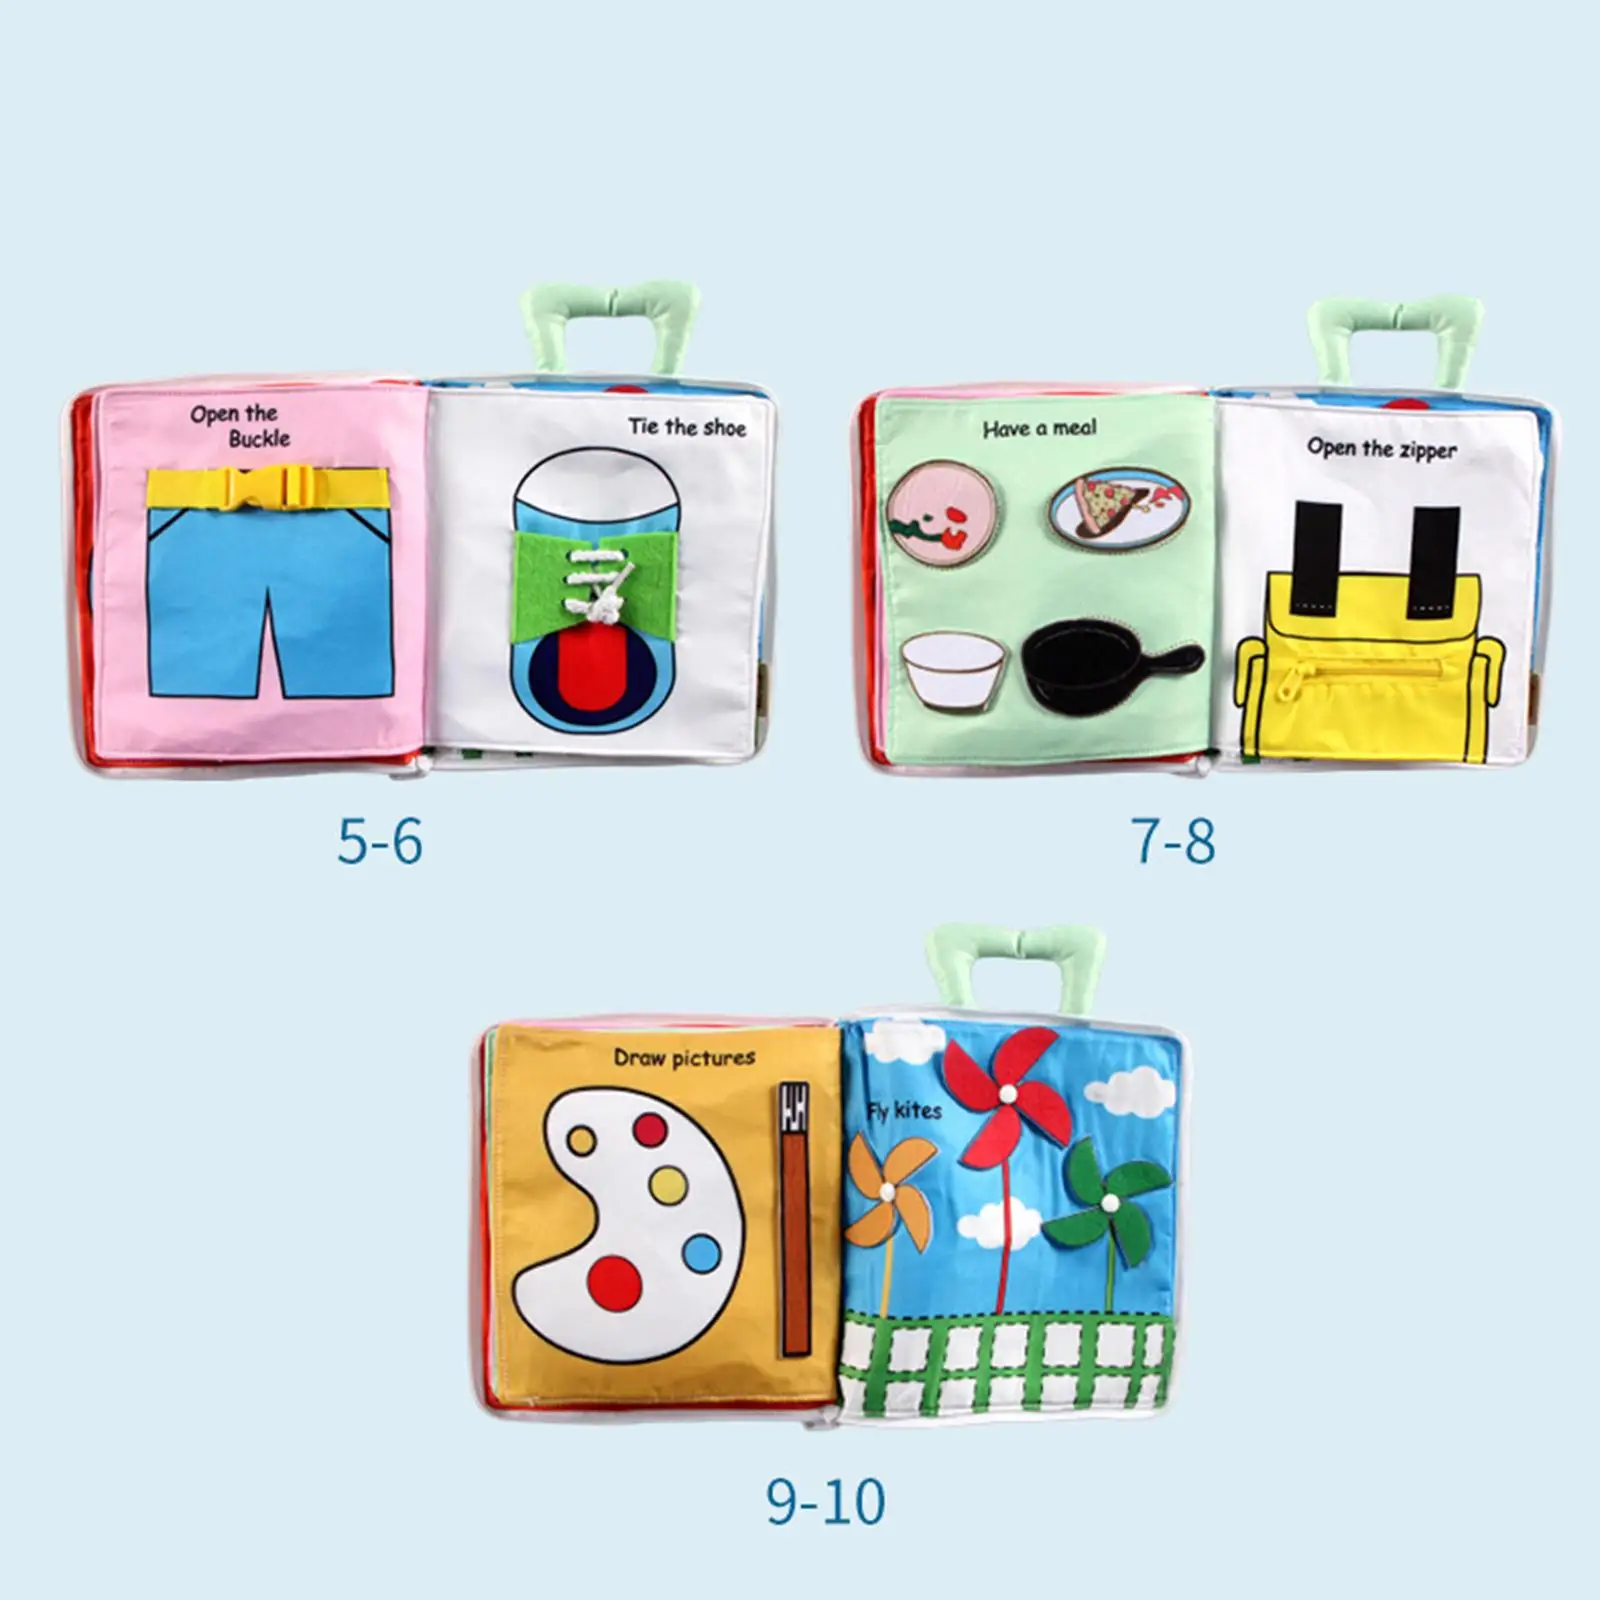 Baby Cloth Book Baby Stroller Toy for Newborn 0-24 Months Birthday Gifts